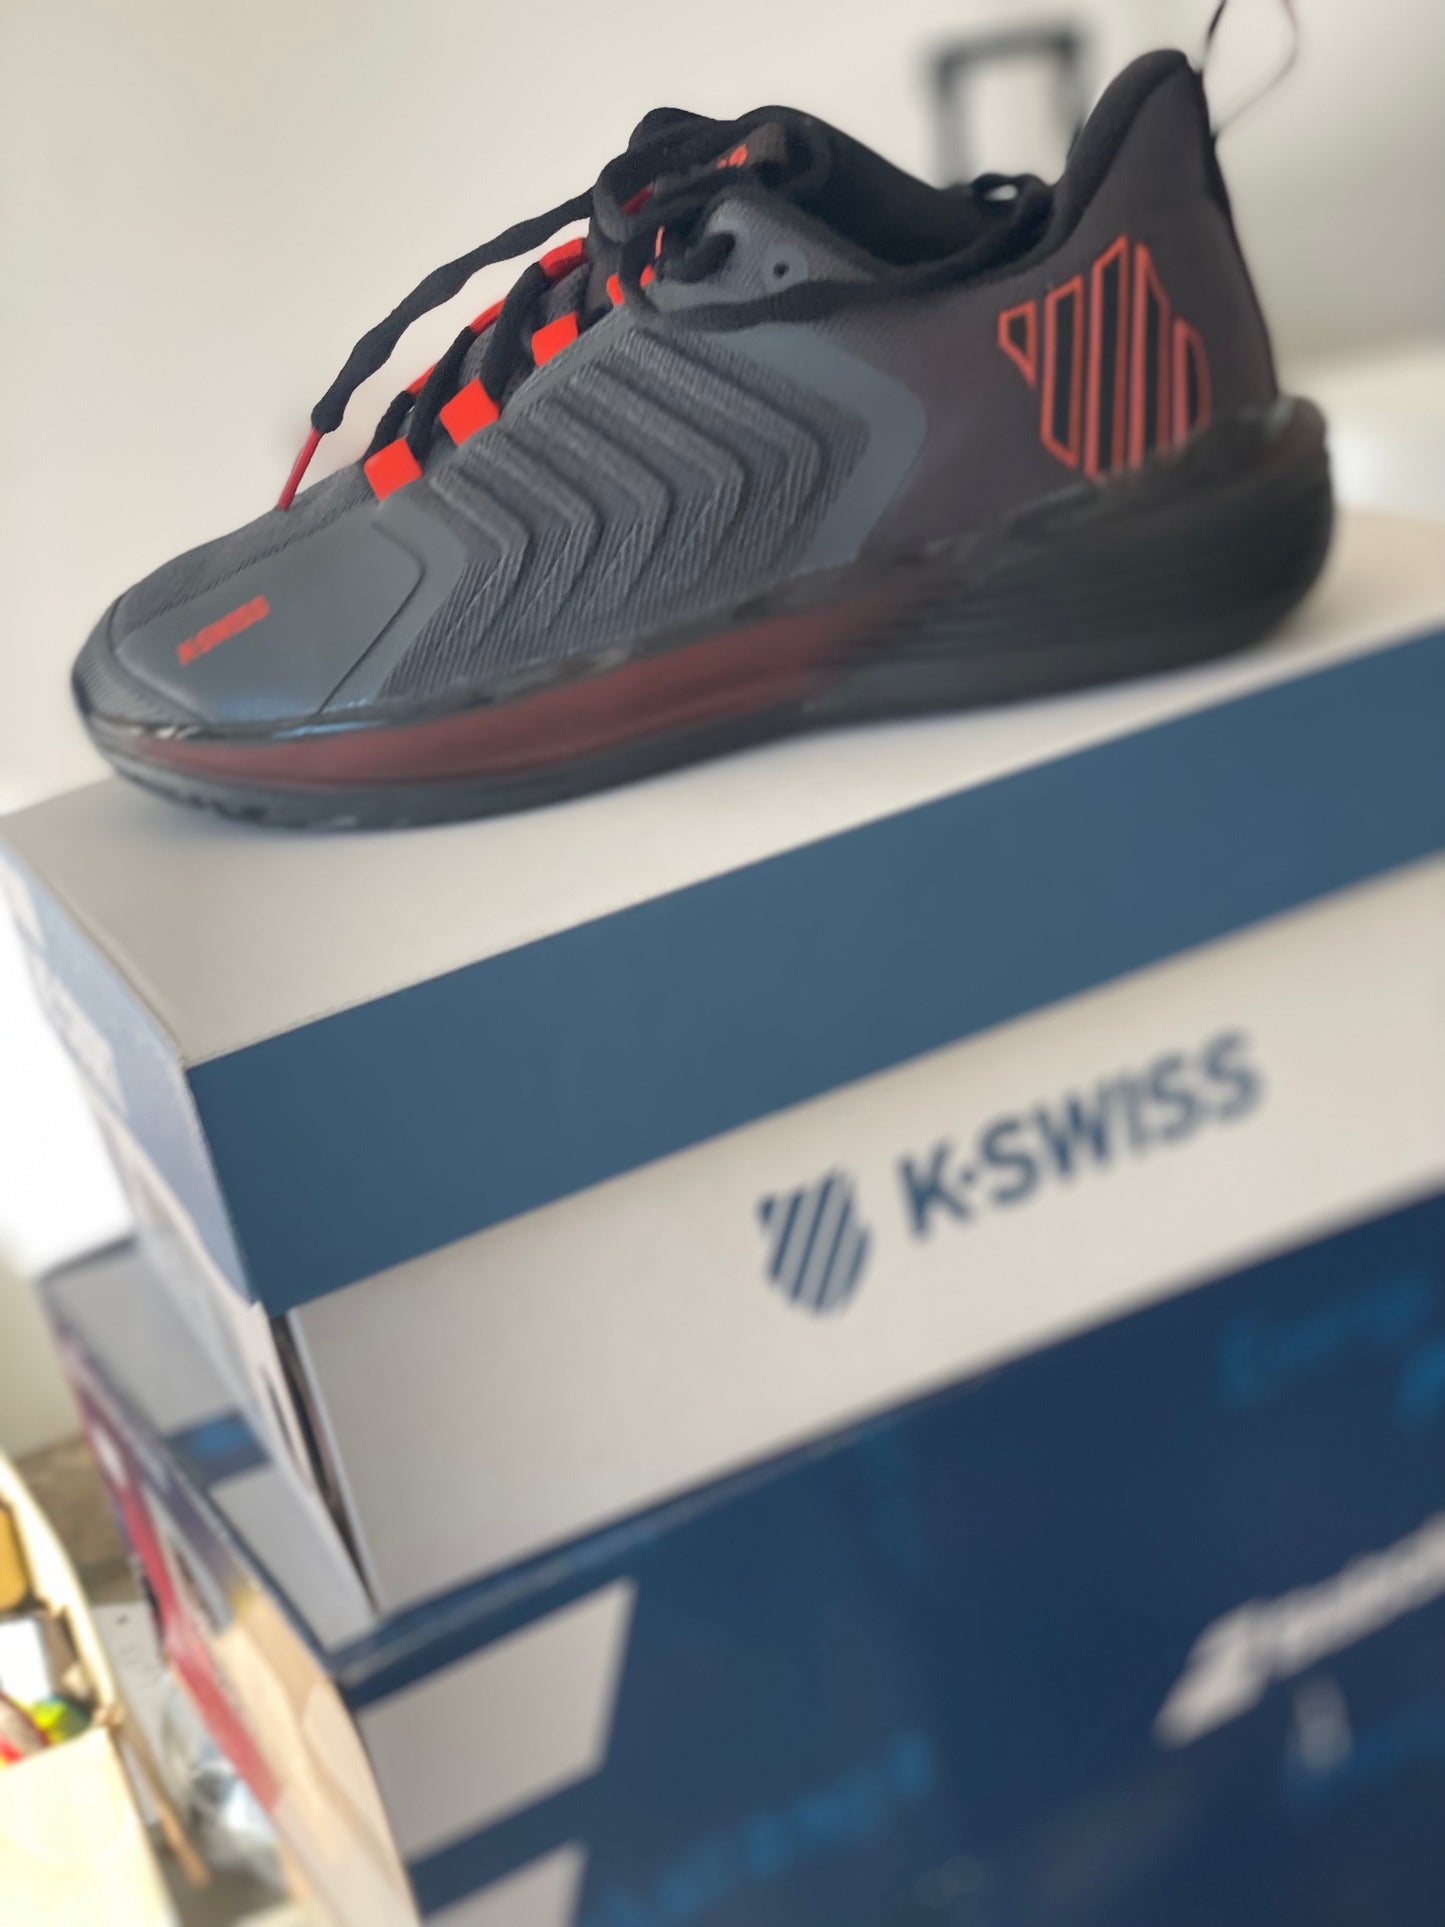 KSwiss Ultrashot 3 Men’s Tennis Shoe